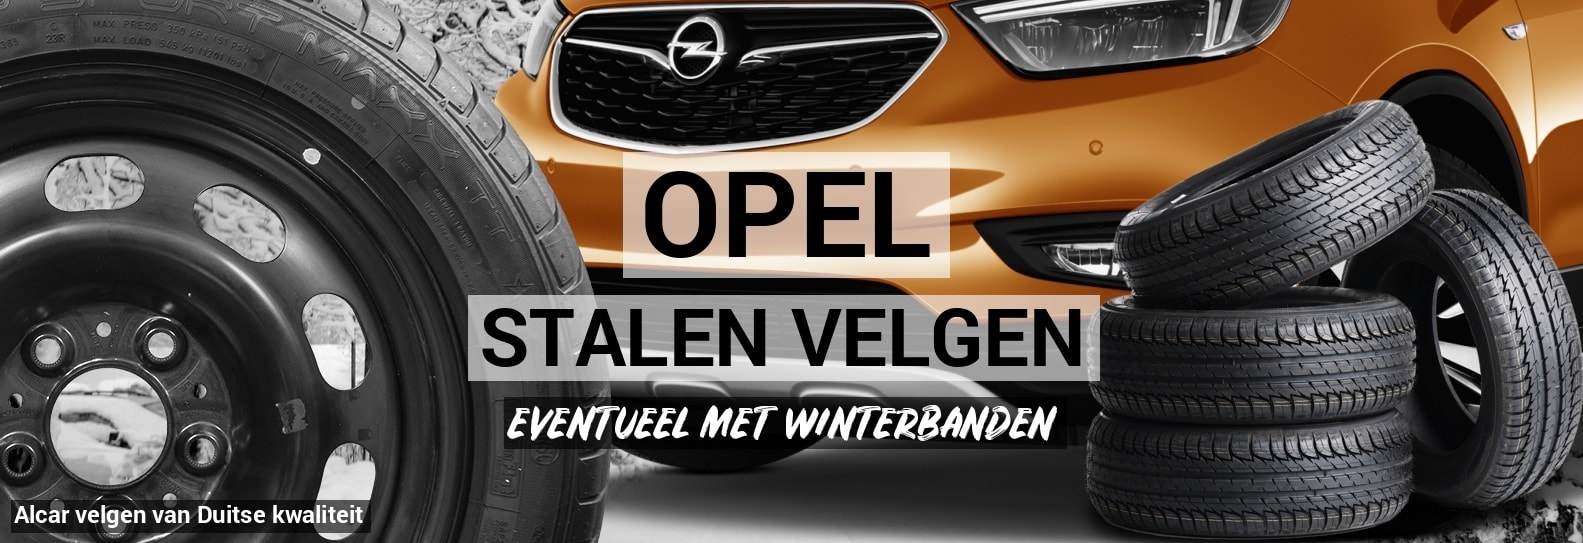 Opel stalen velgen